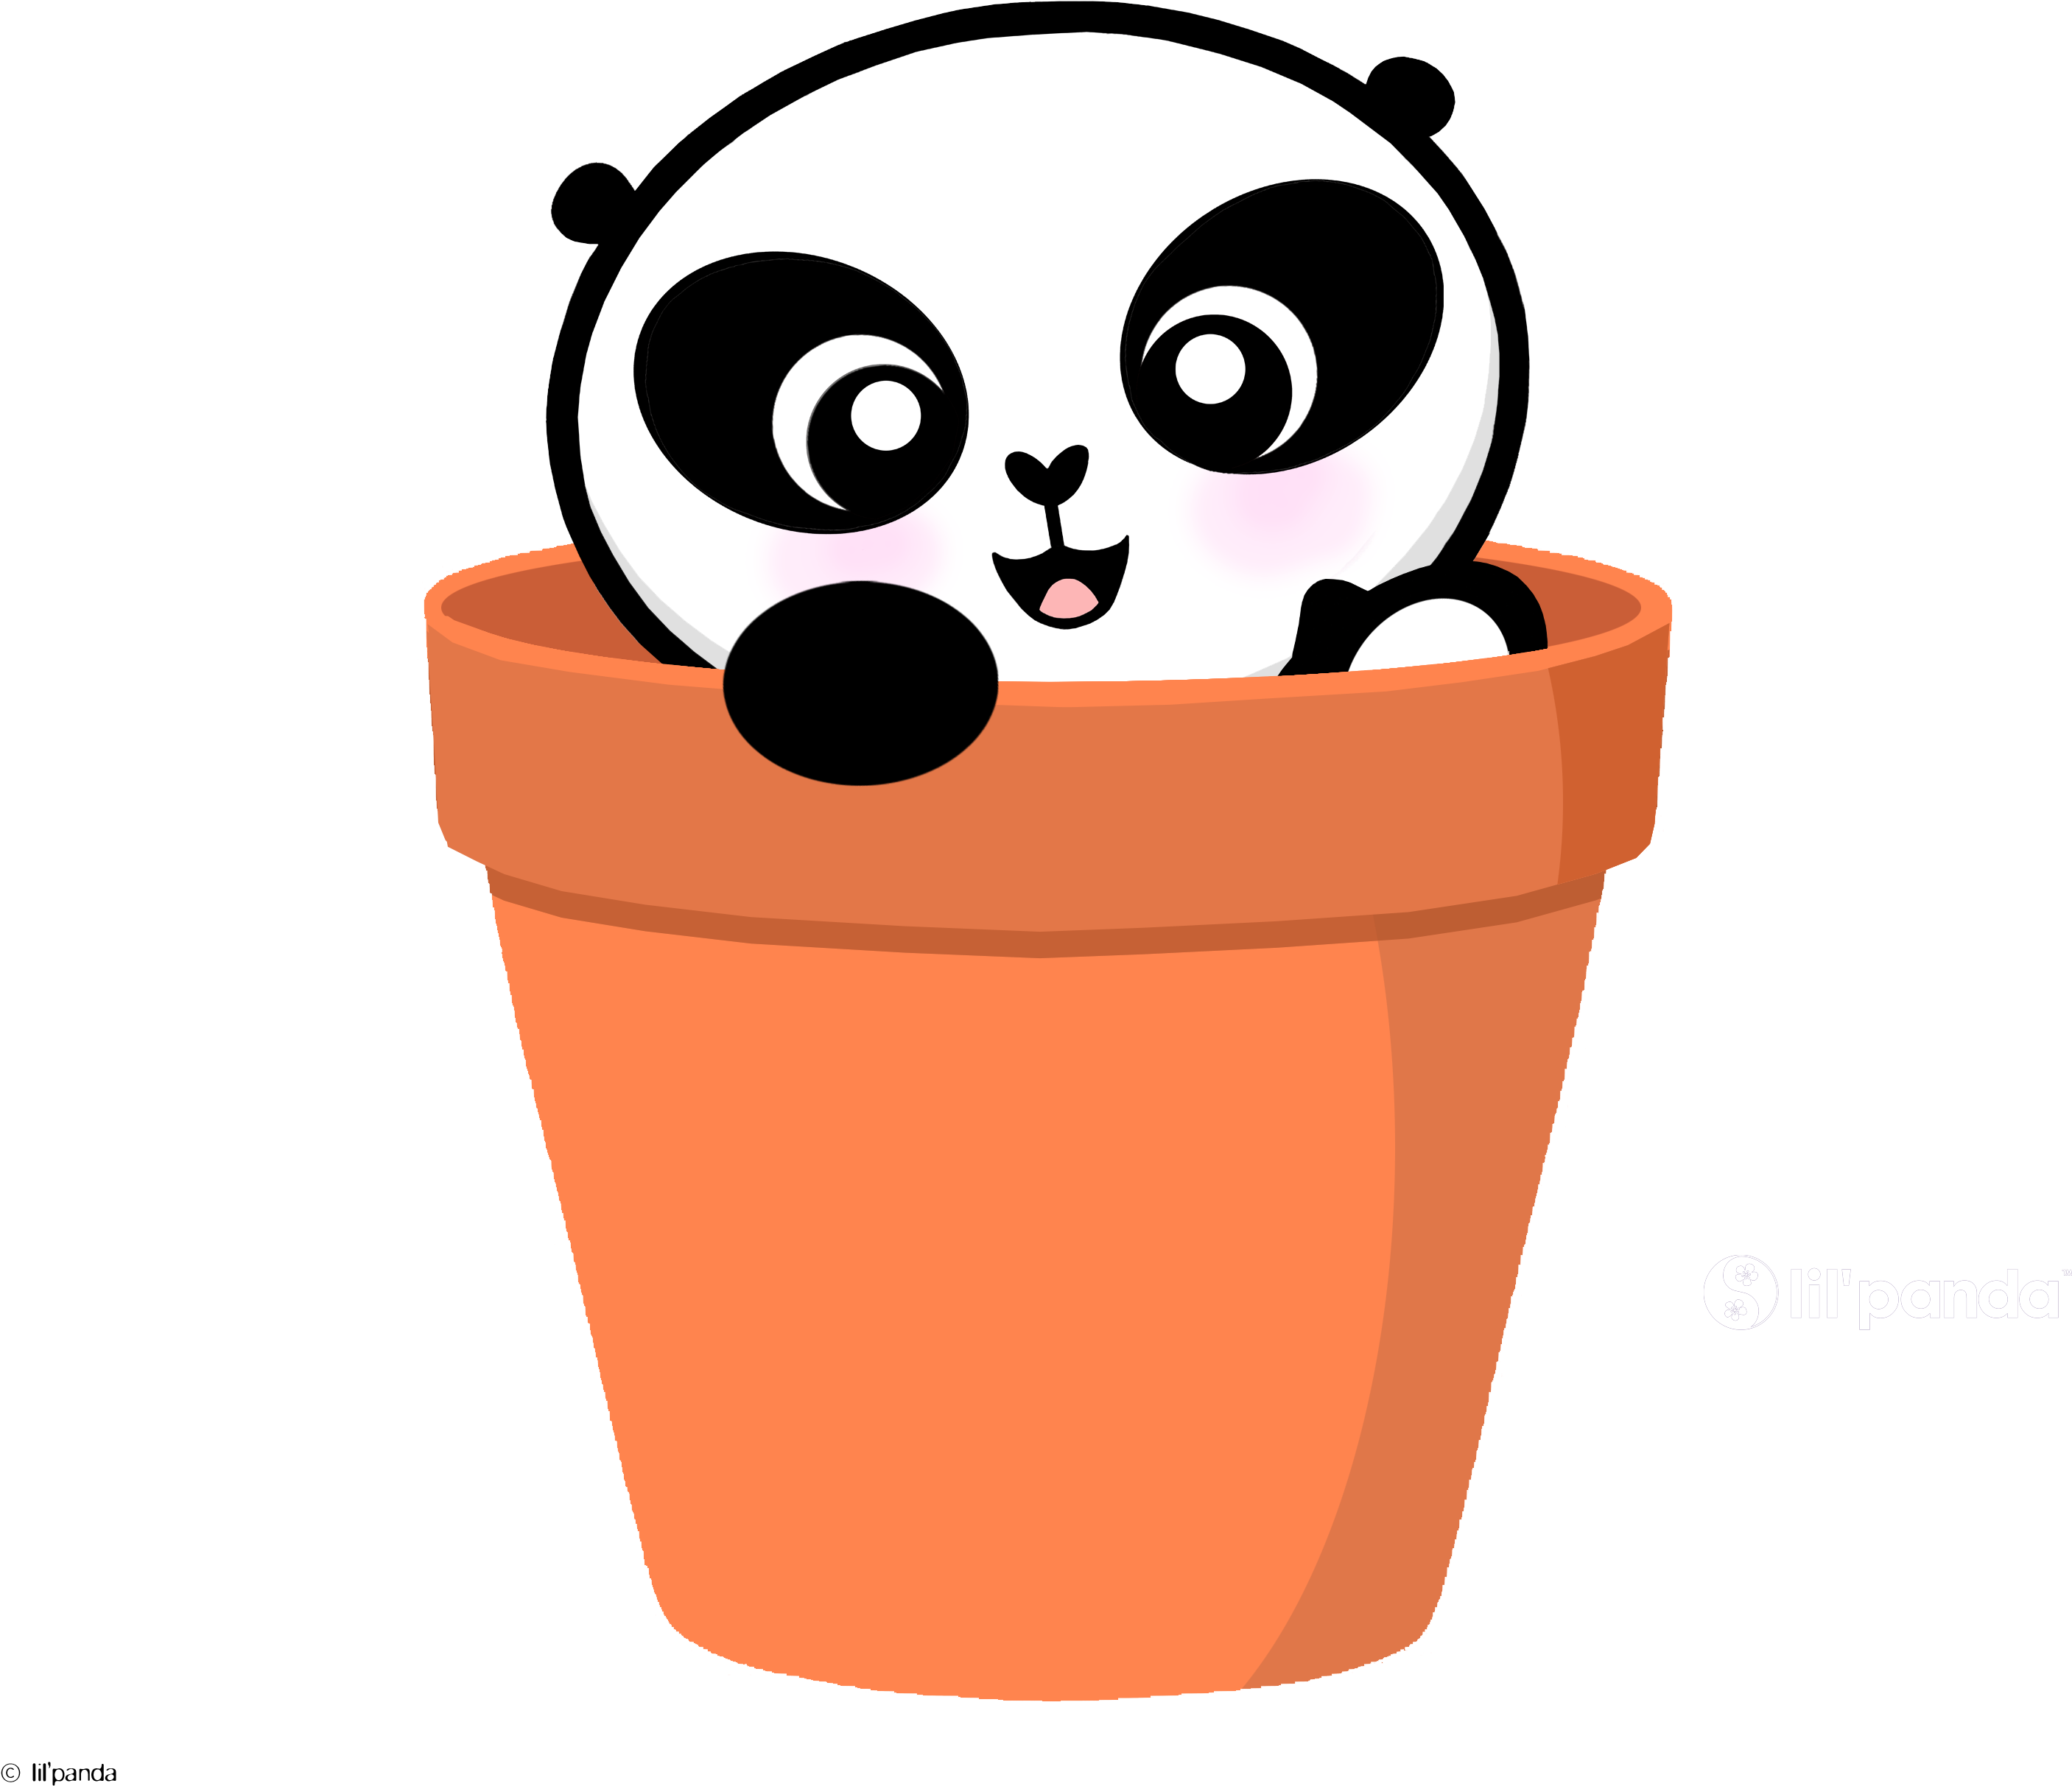 Lil'panda In Pot - Giant Panda (2889x3015)